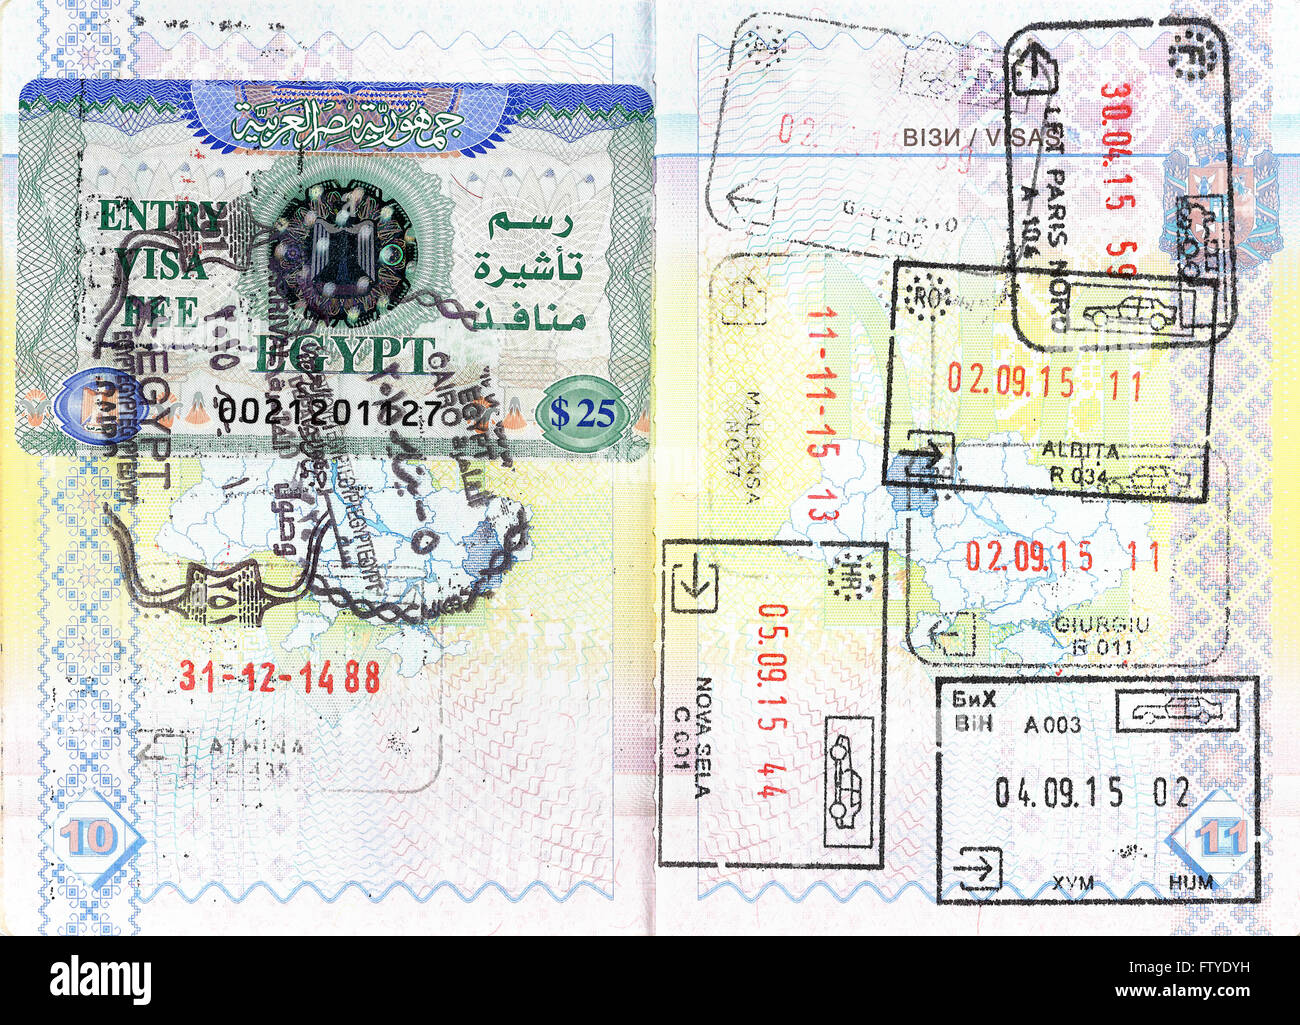 Passport stamps of Egypt, Greece, Bulgaria, France, Italy, Romania, Croatia, Bosnia and Herzegovina Stock Photo